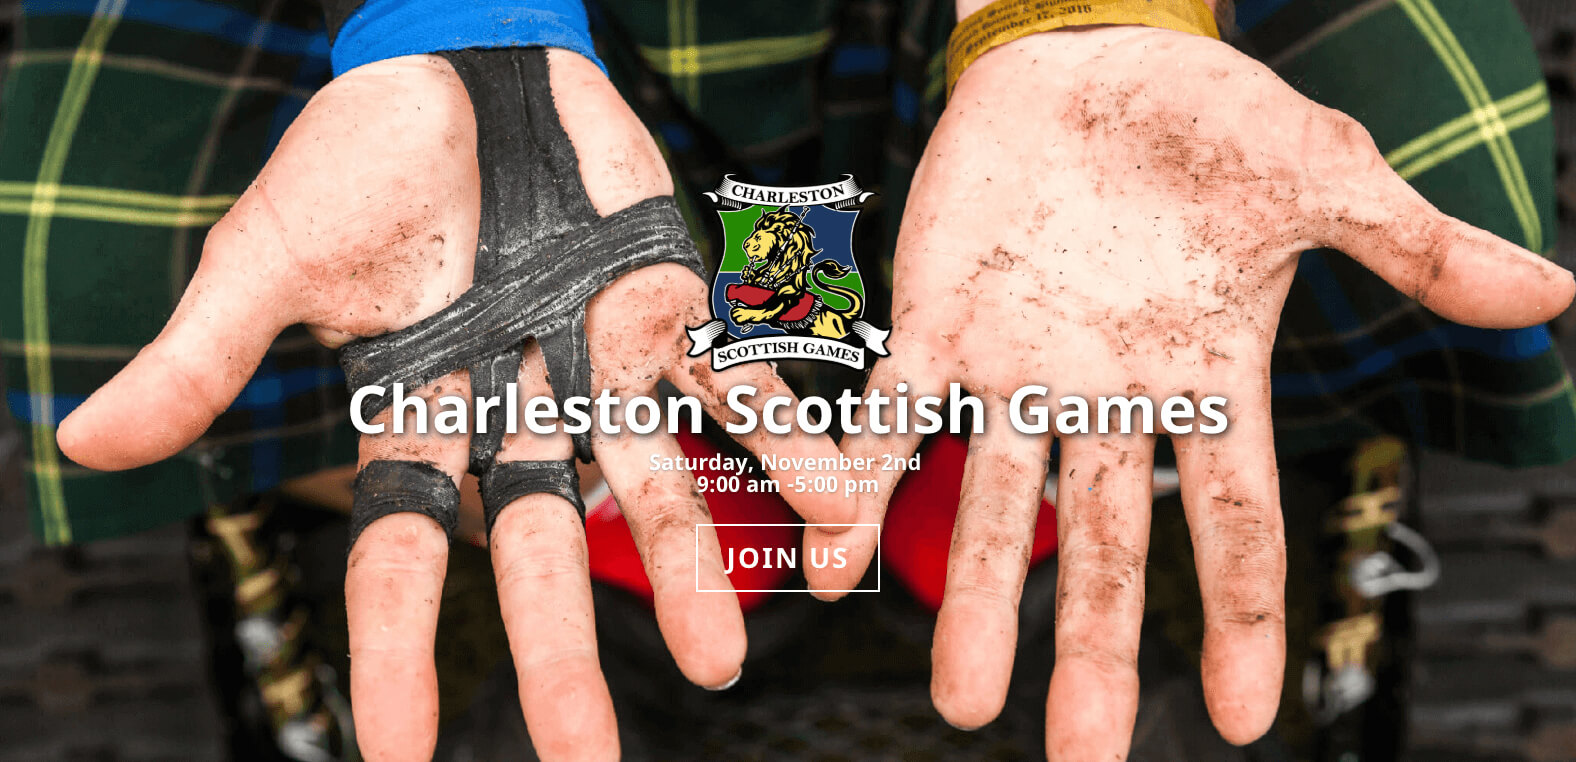 charleston scottish games event marketing web design graphics